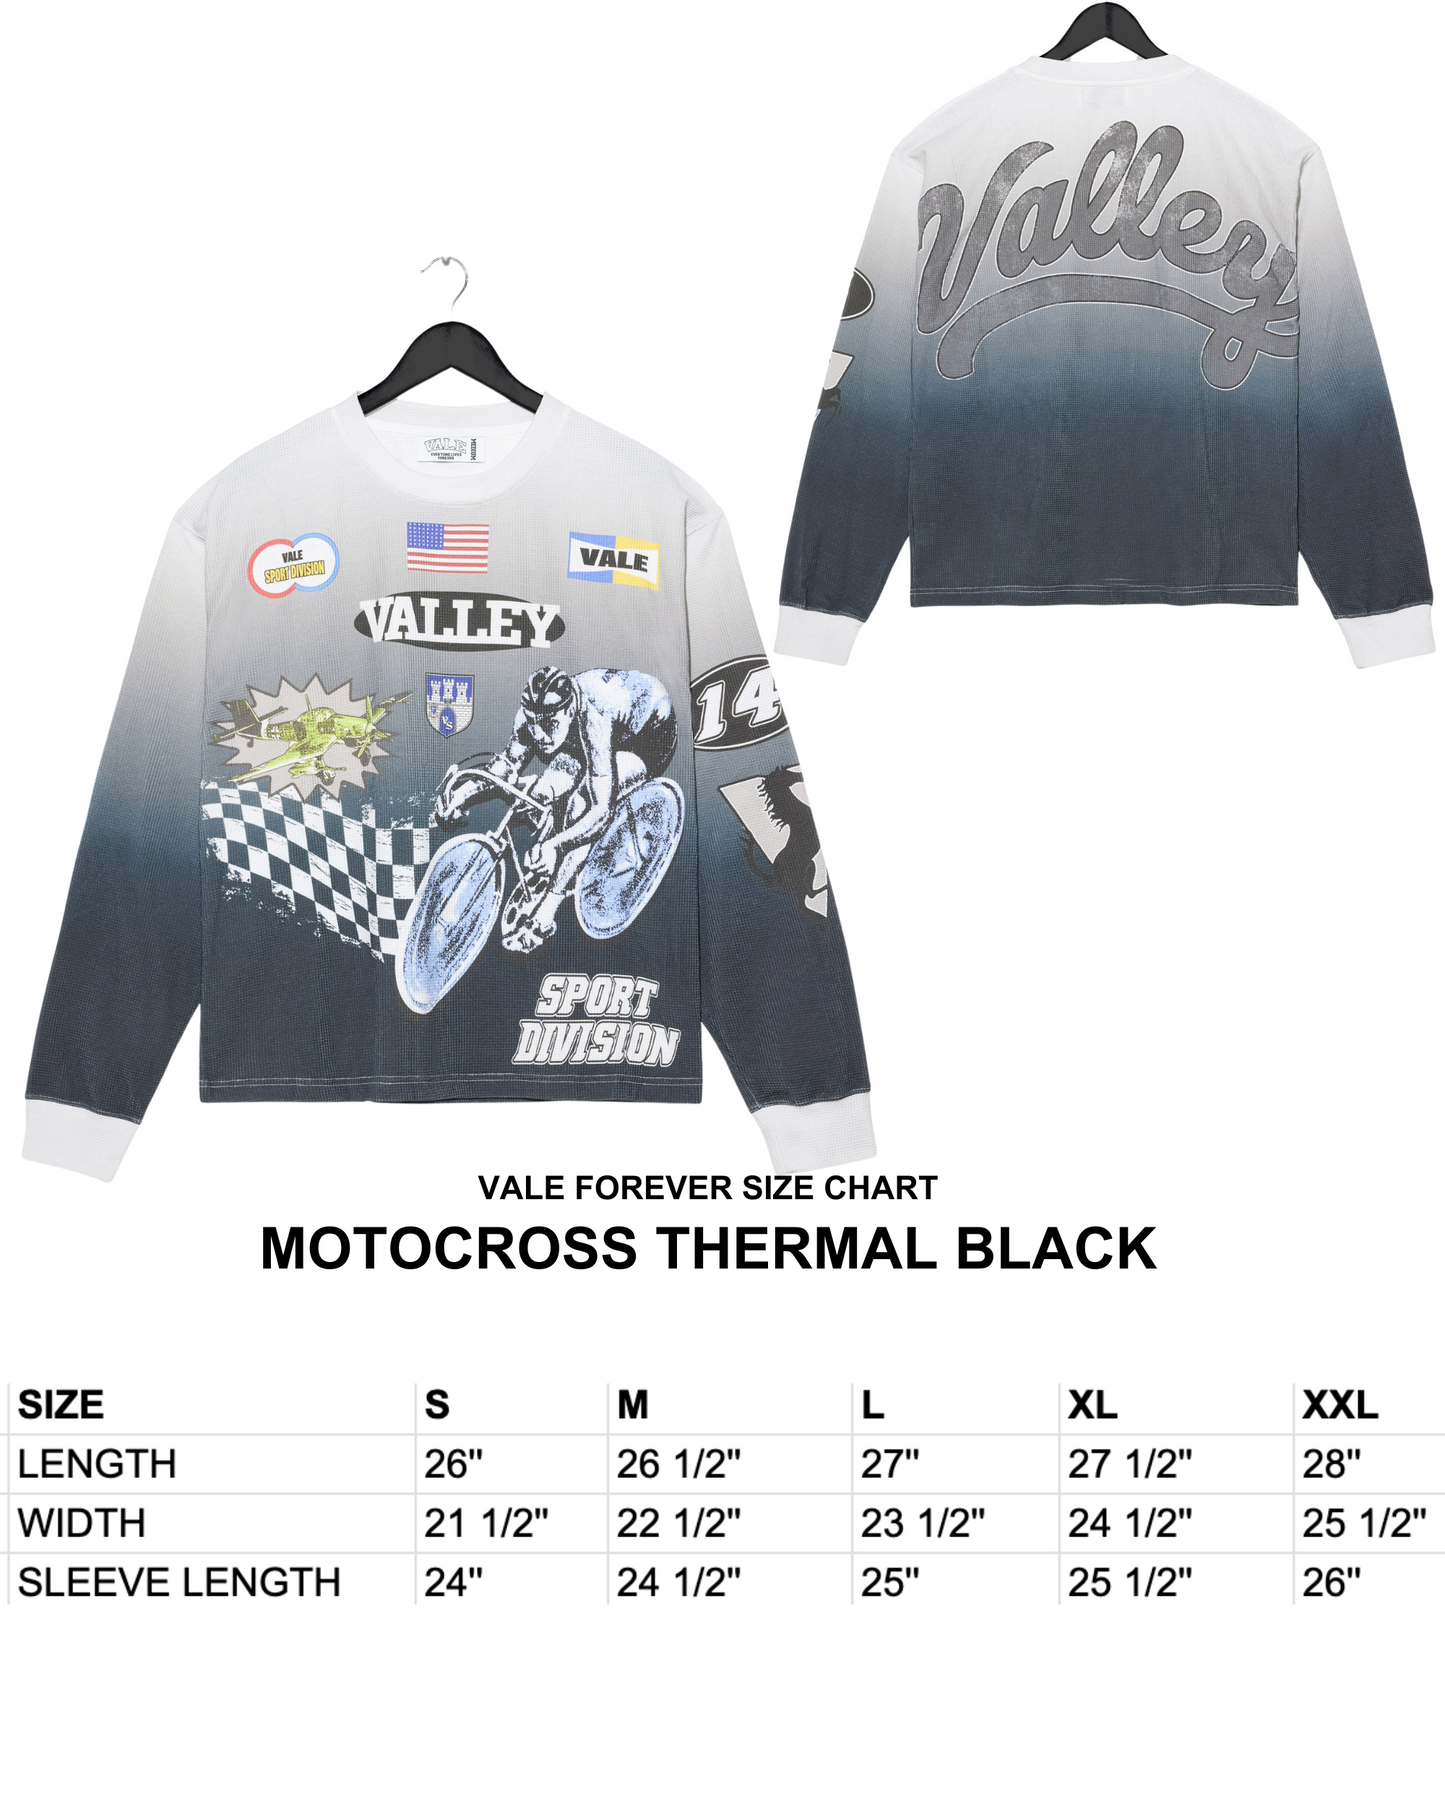 MOTOCROSS THERMAL BLACK